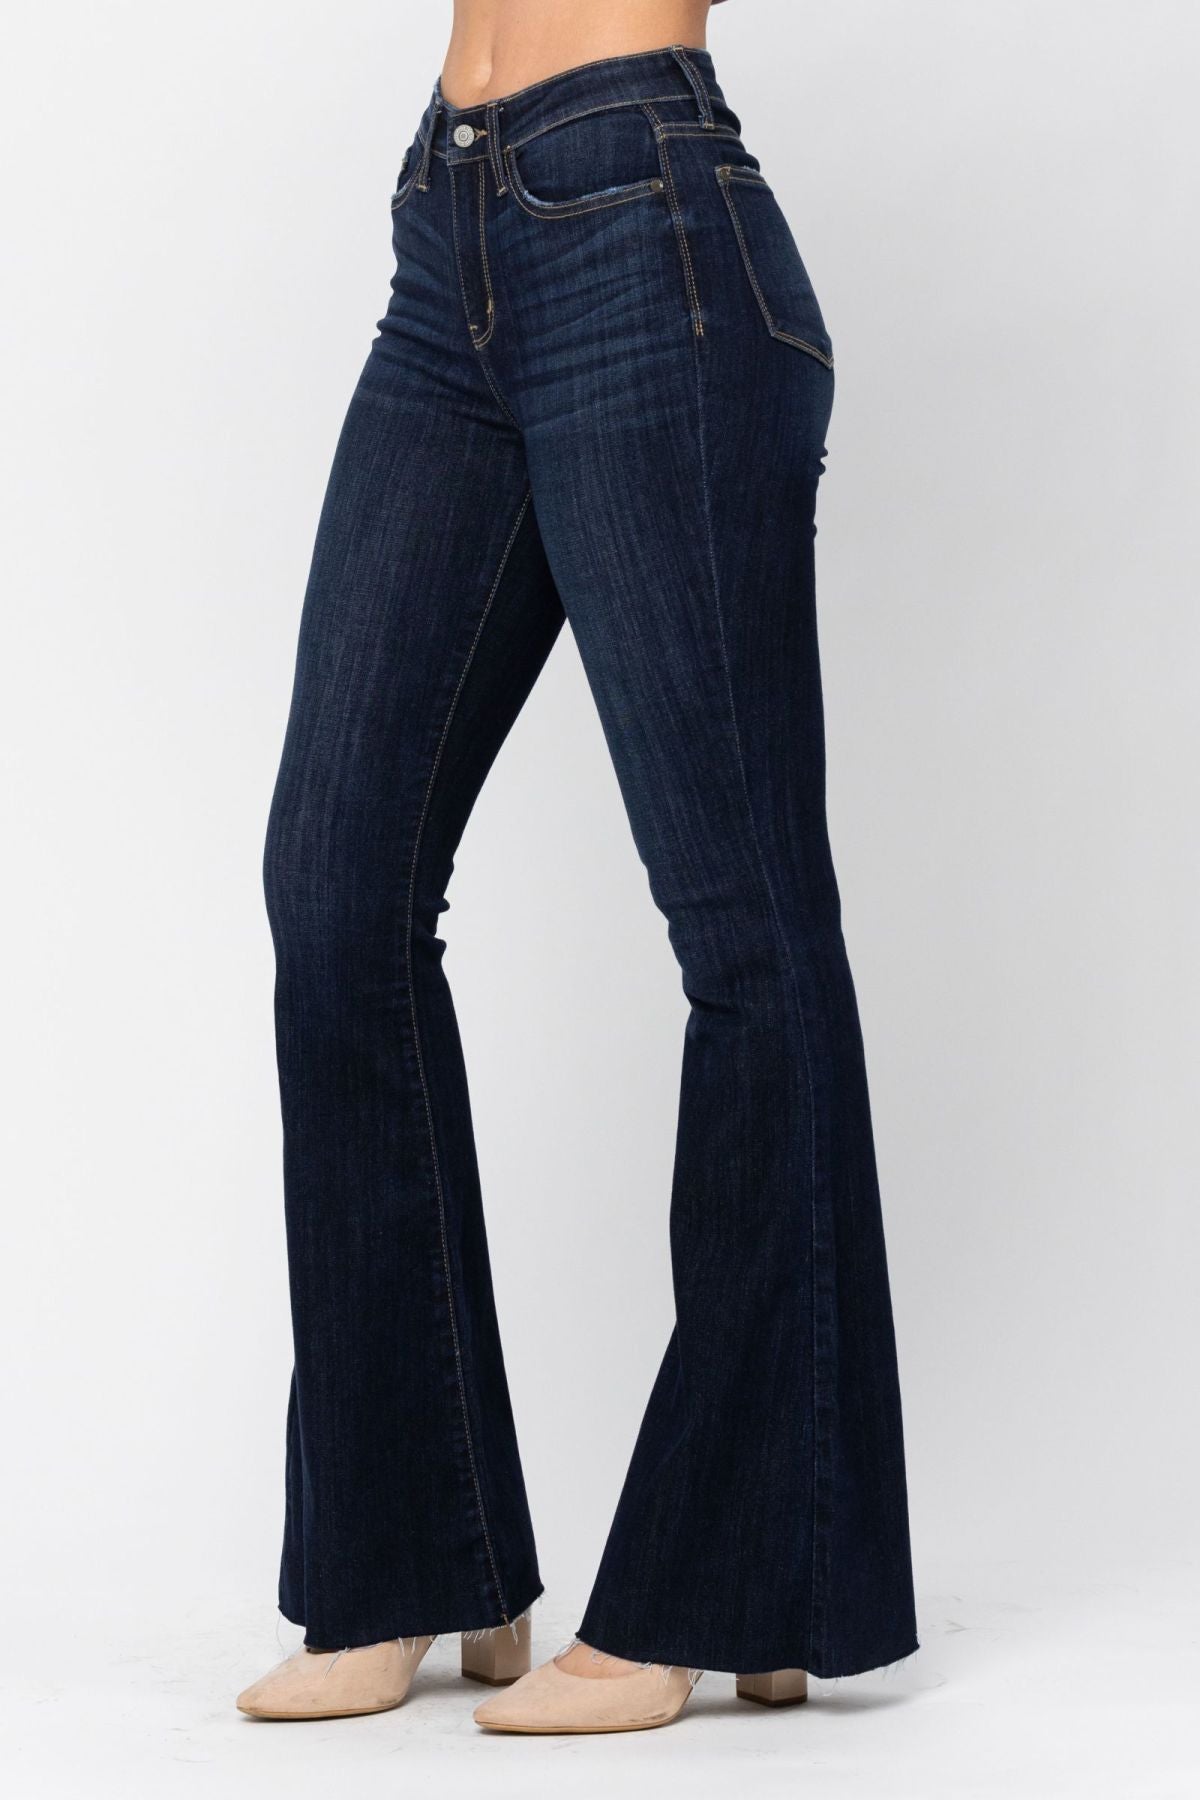 Judy Blue High Waist Raw Hem Tall Flare Jeans